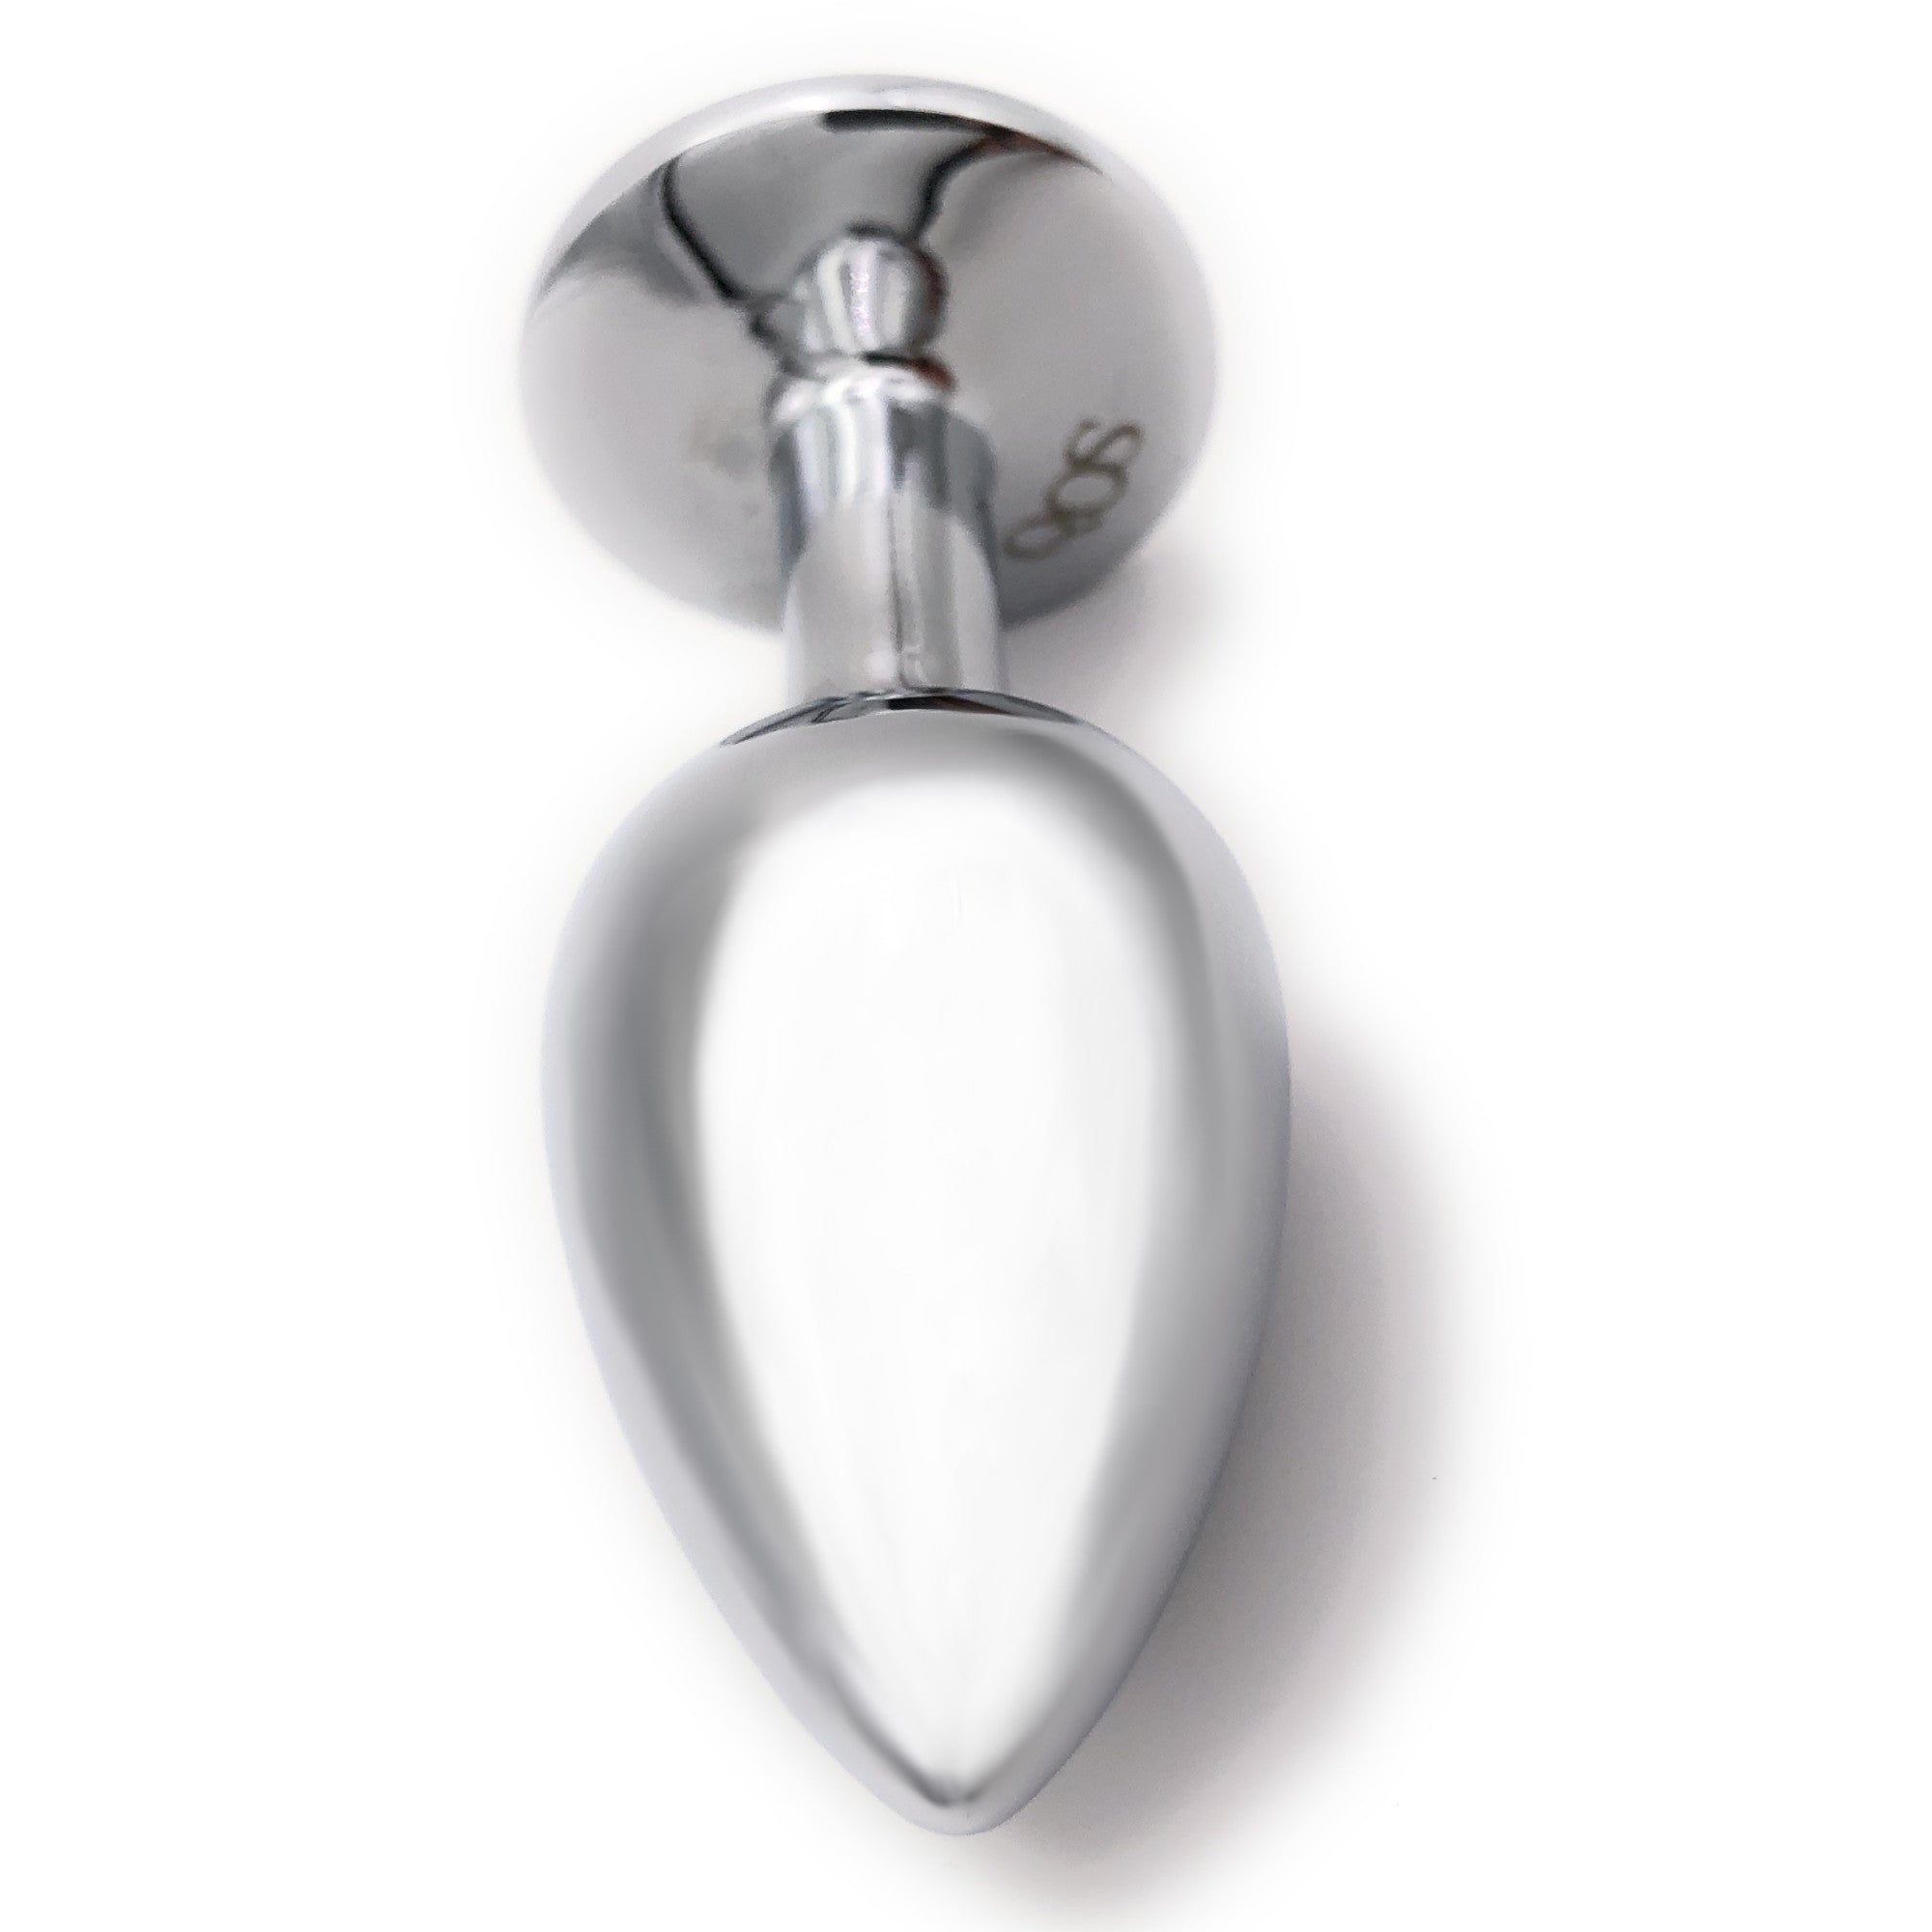 QOS SLUT Q & Spade shaped Silver Anal Butt Plug